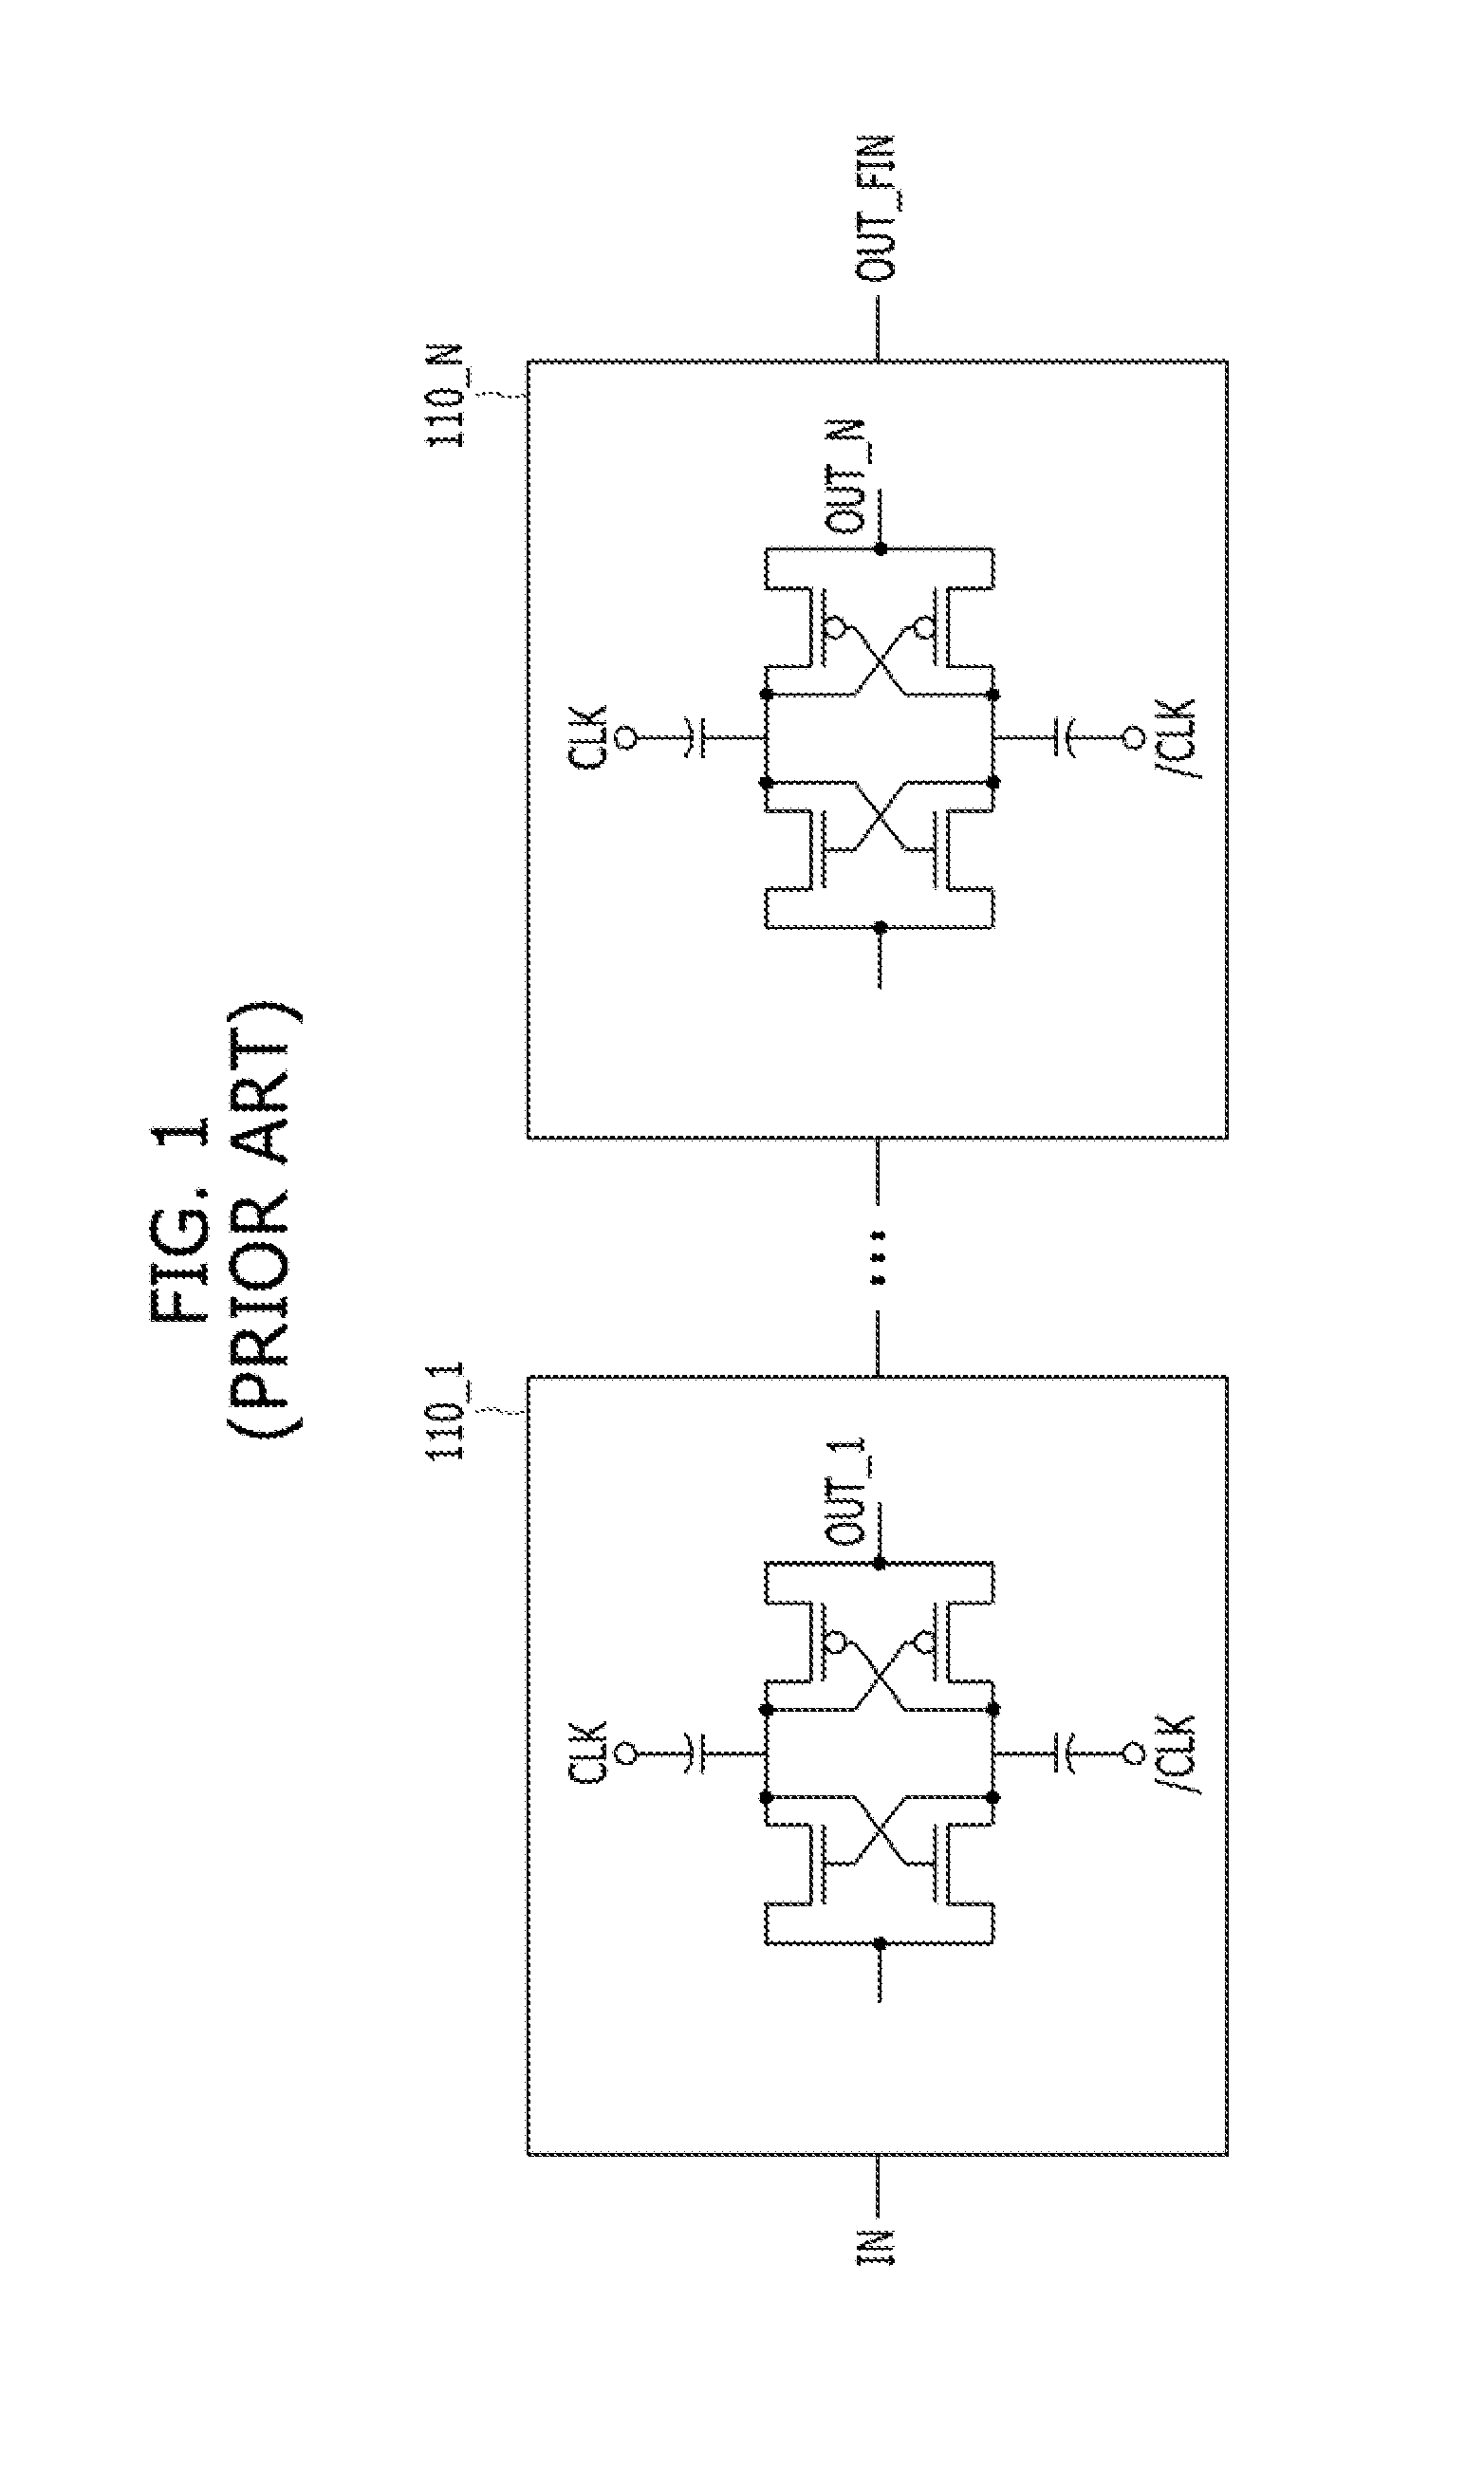 Internal voltage generation circuit